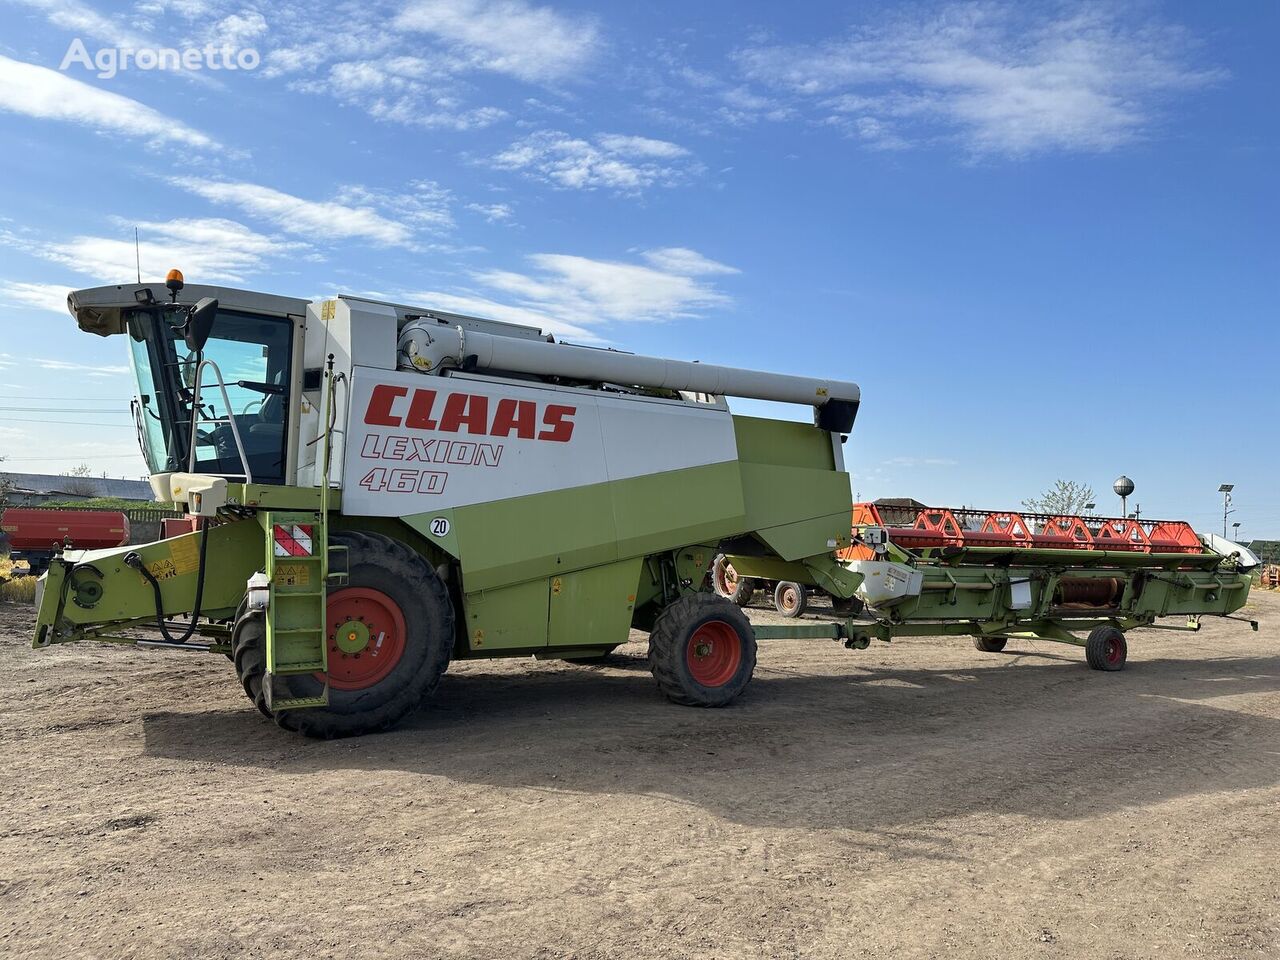 Claas Lexion 460 grain harvester